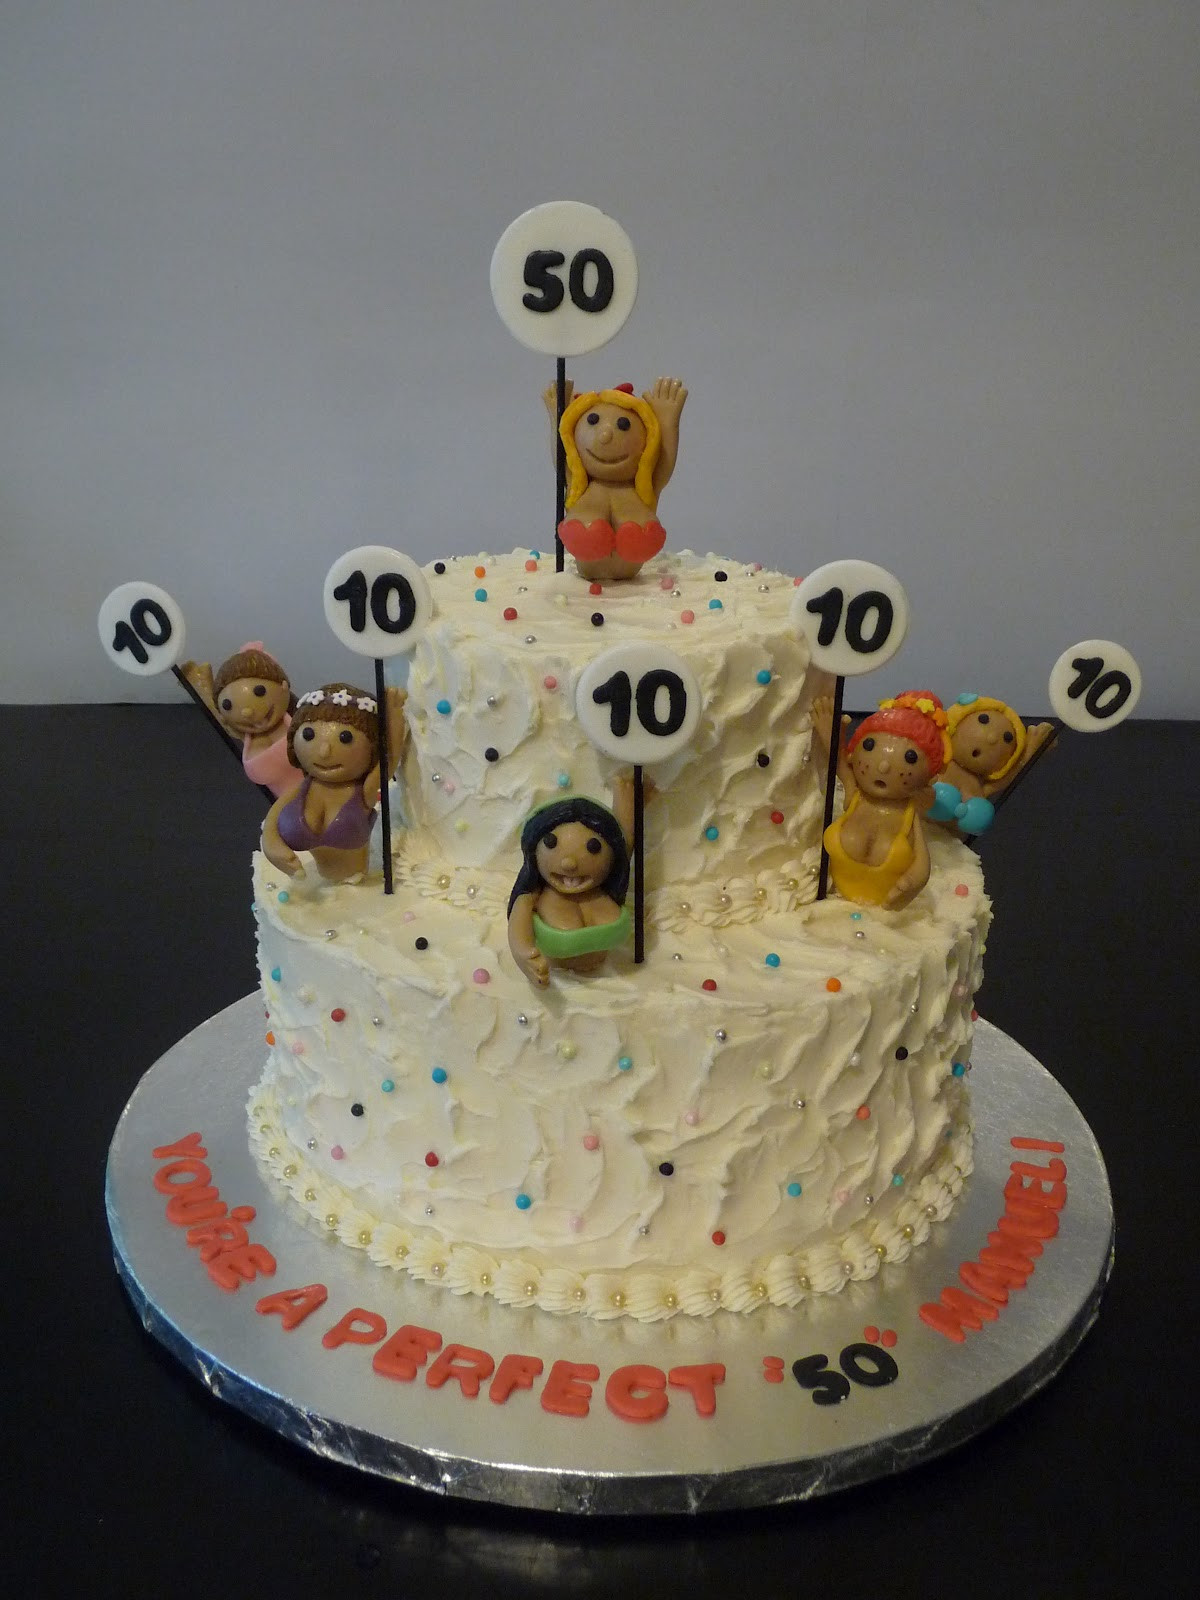 Happy 50th Birthday Cake
 CLASSIC CAKES Happy "50th" Birthday